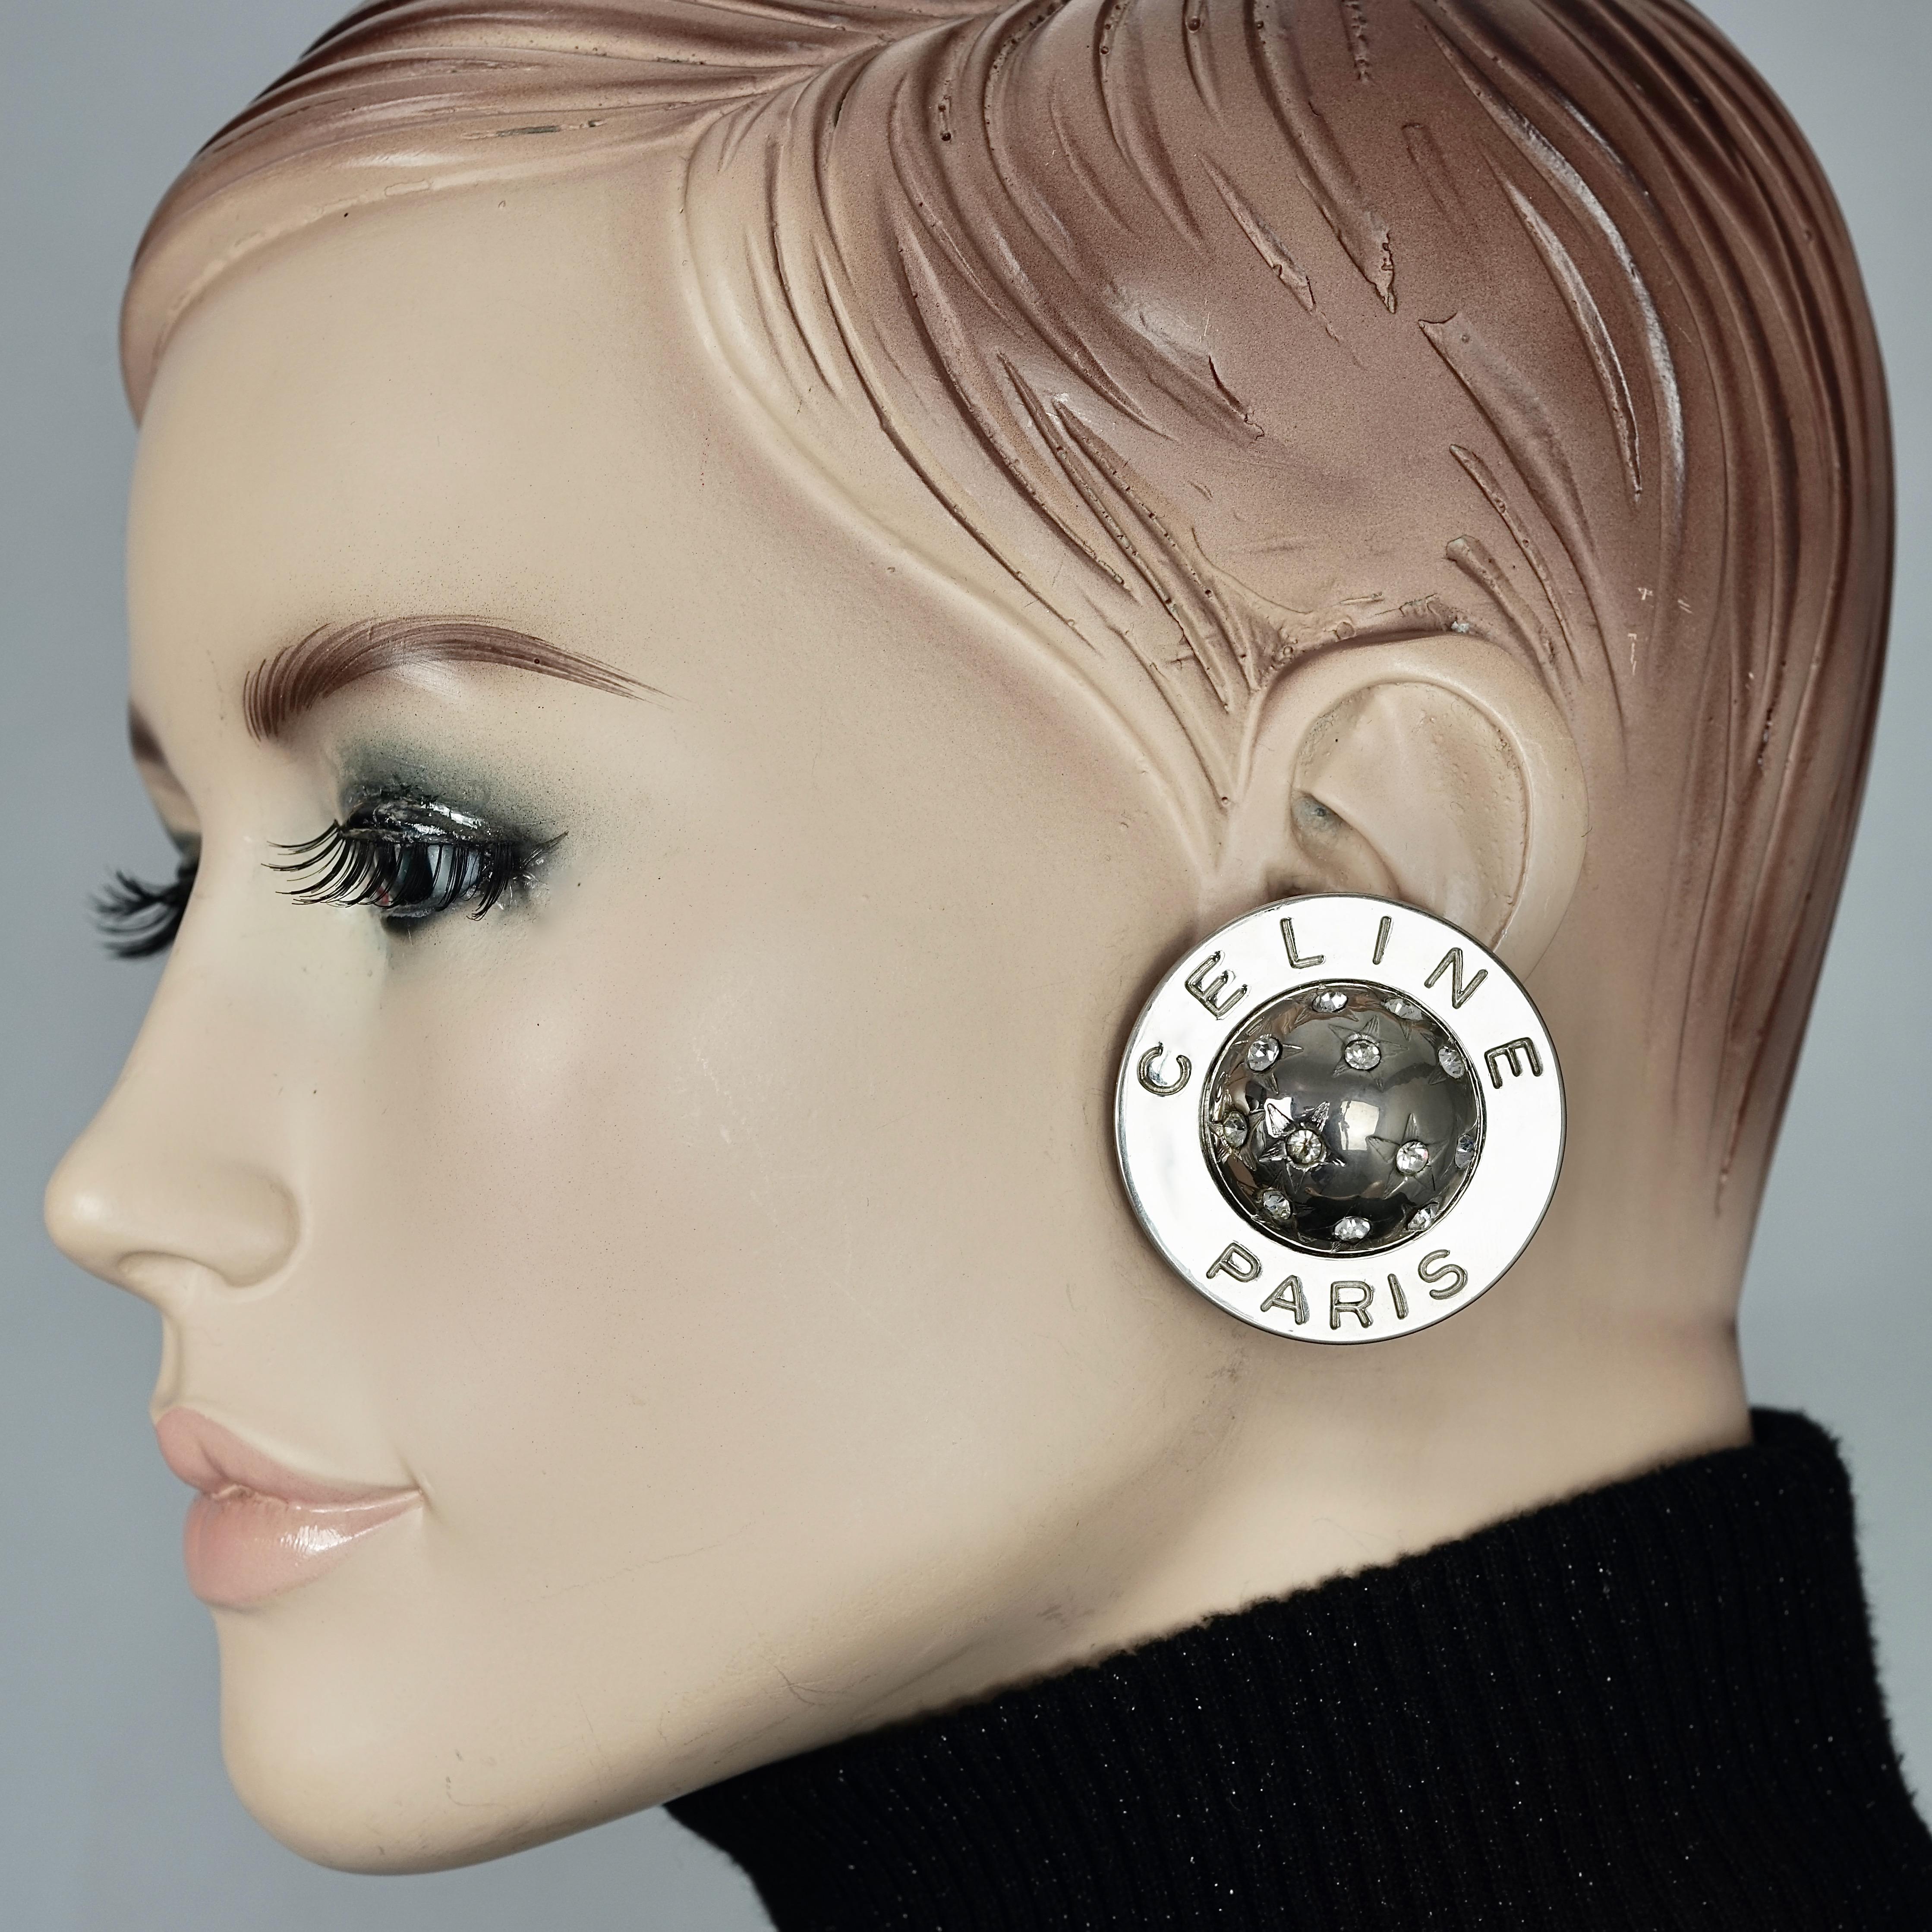 Vintage 1989 CELINE PARIS Rhinestone Planet Sphere Earrings

Measurements:
Height: 1.69 inches  (4.3 cm)
Width: 1.69 inches  (4.3 cm)
Depth: 0.55 inch (1.4 cm)
Weight per Earring: 25 grams

Features:
- 100% Authentic CELINE PARIS.
- Round earrings